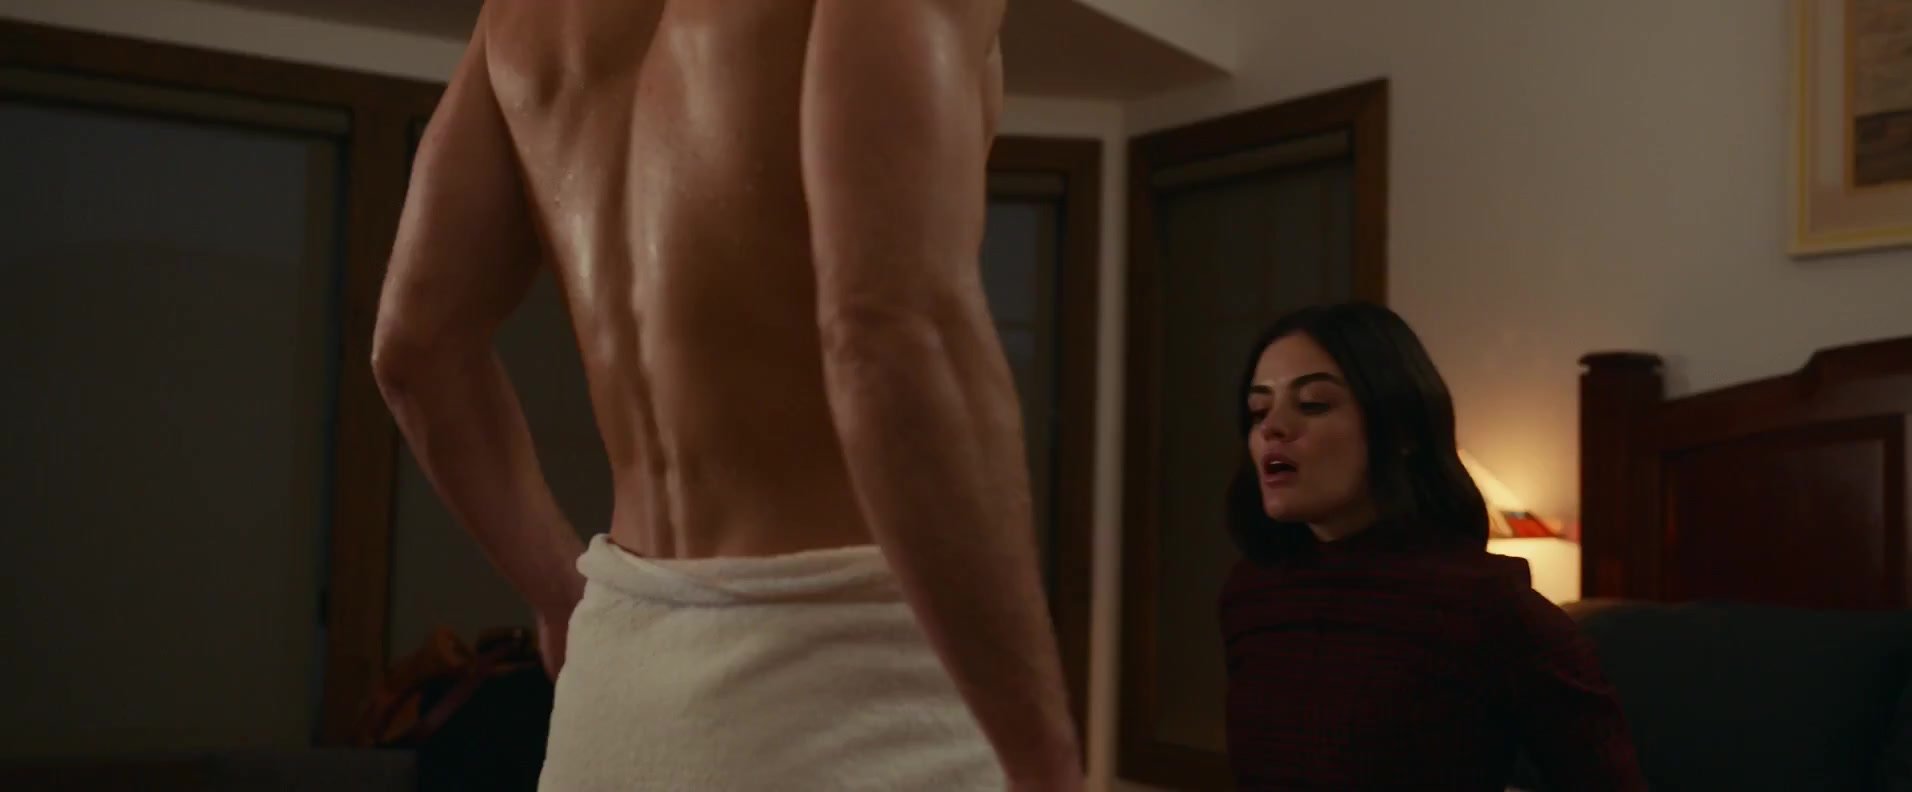 CFNM sex scene in a movie image